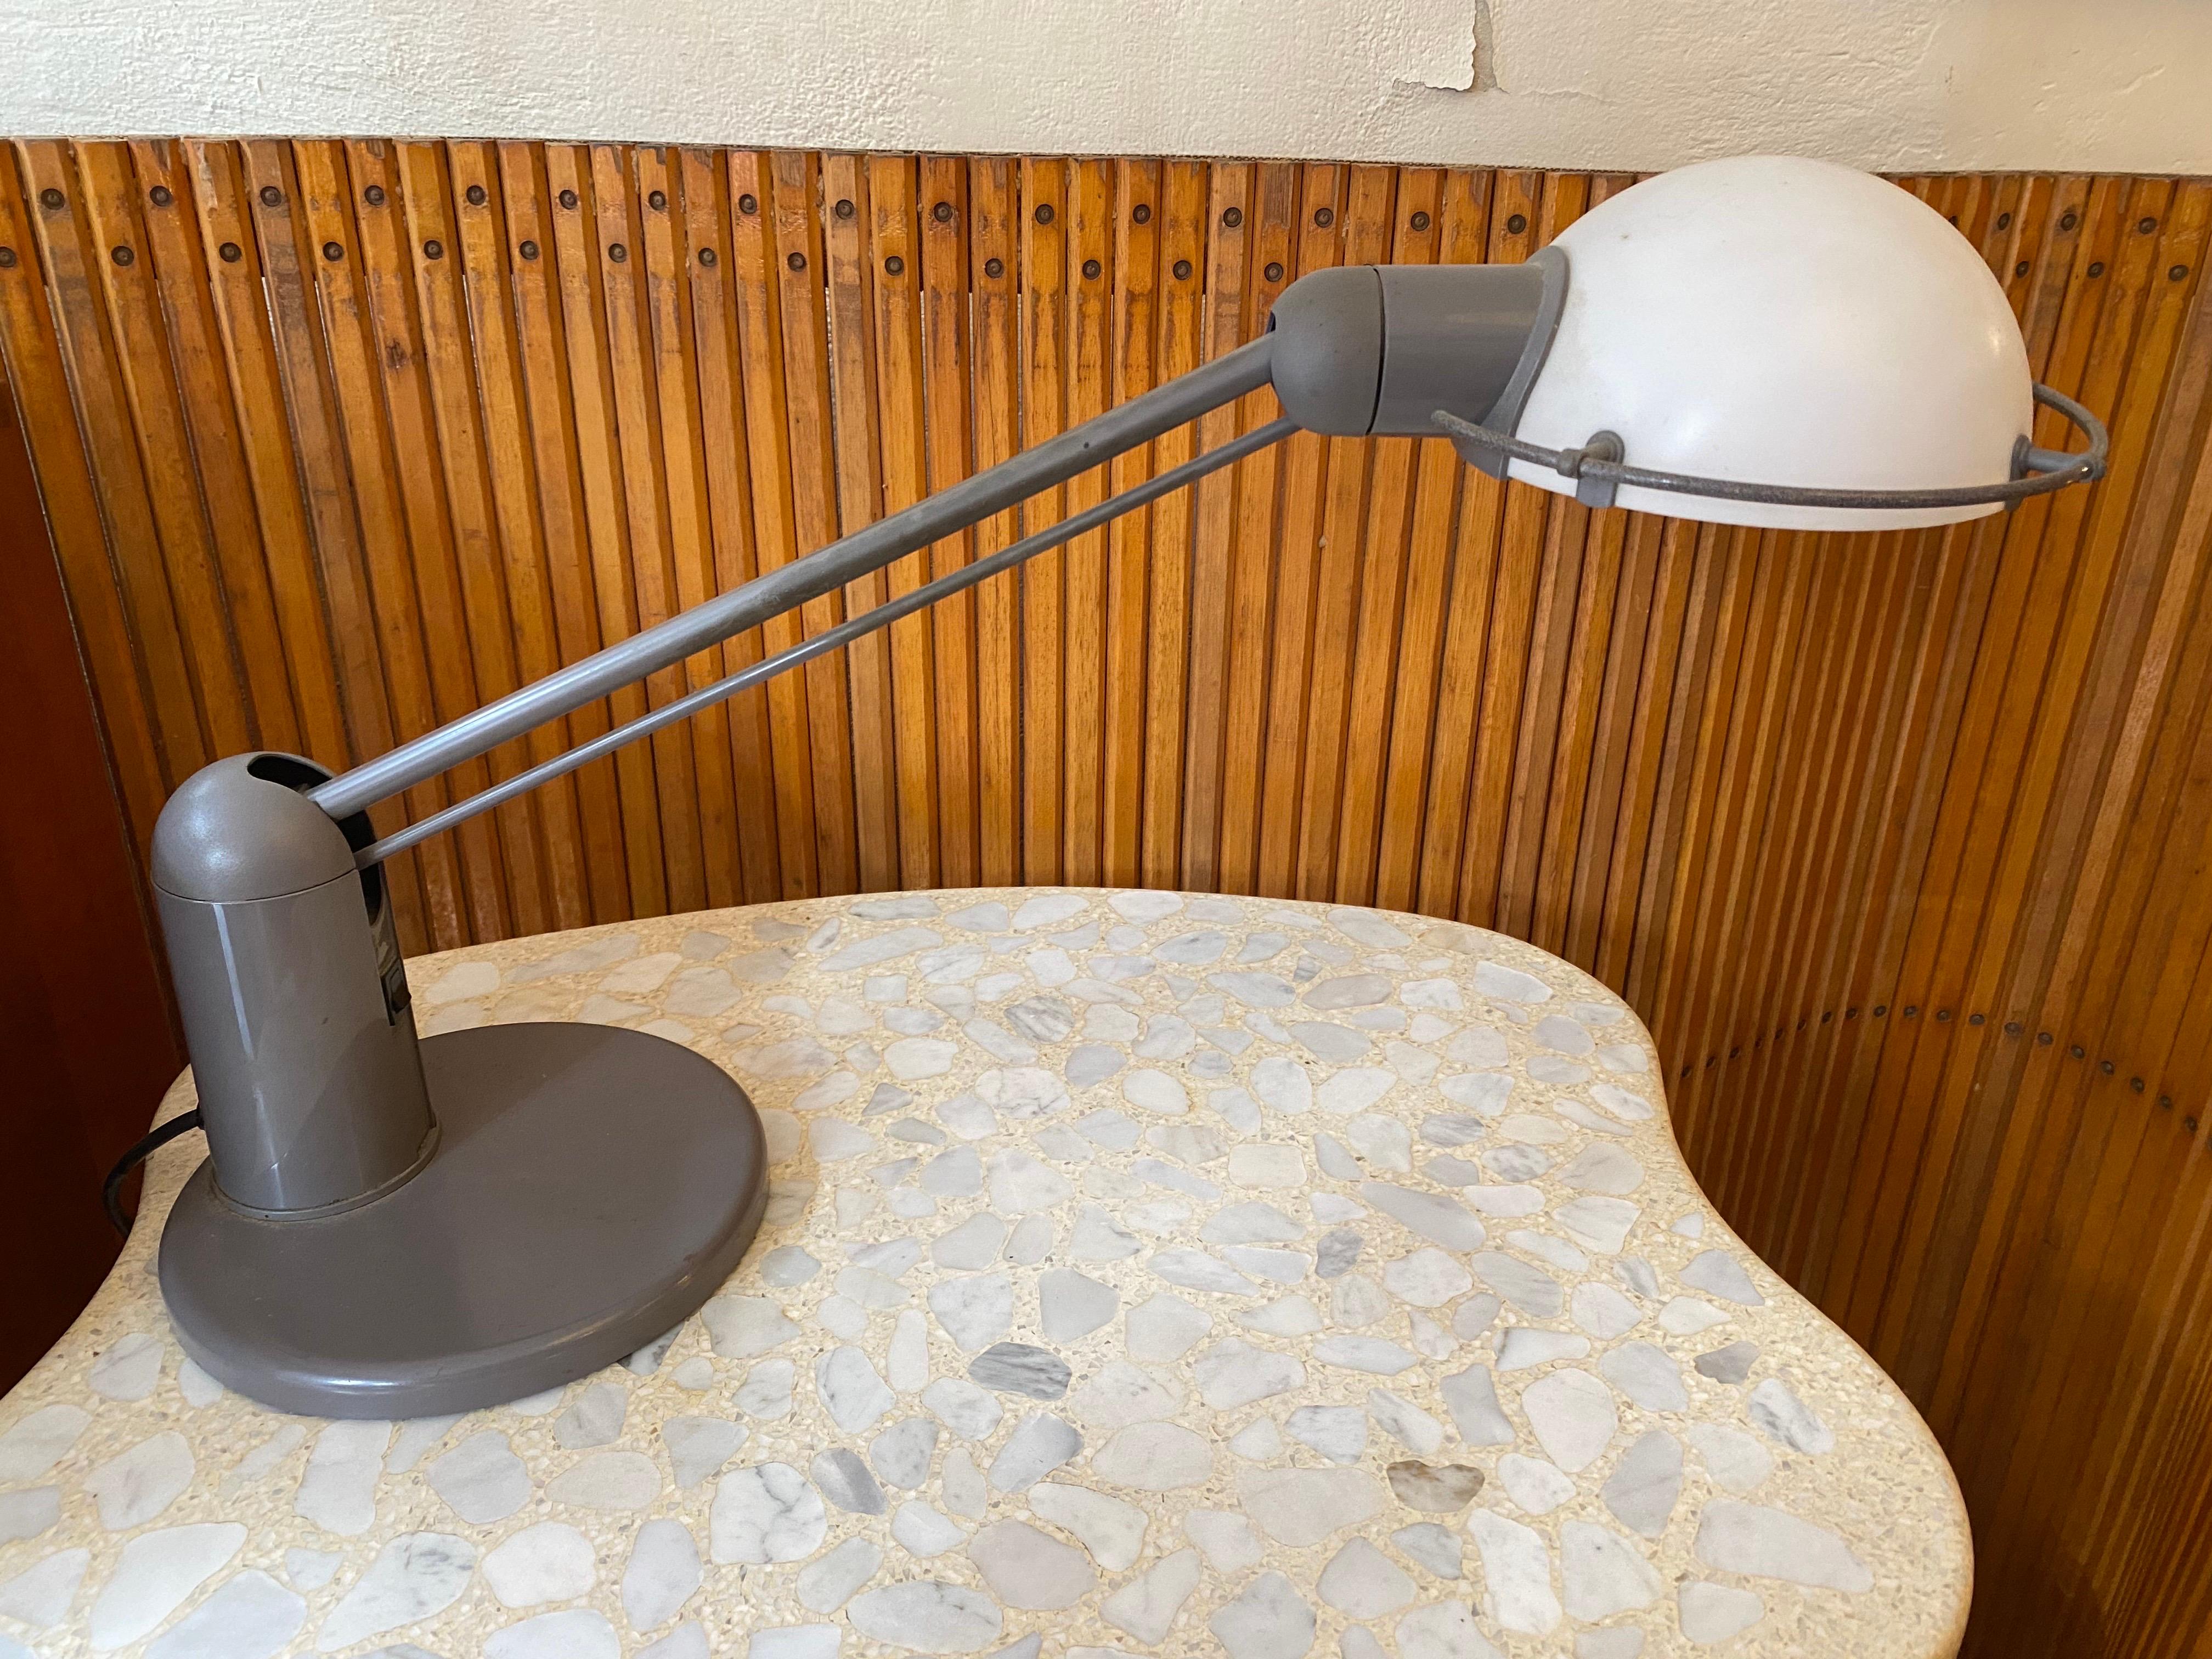 Steelcase Task or Desk Lamp In Good Condition For Sale In Philadelphia, PA